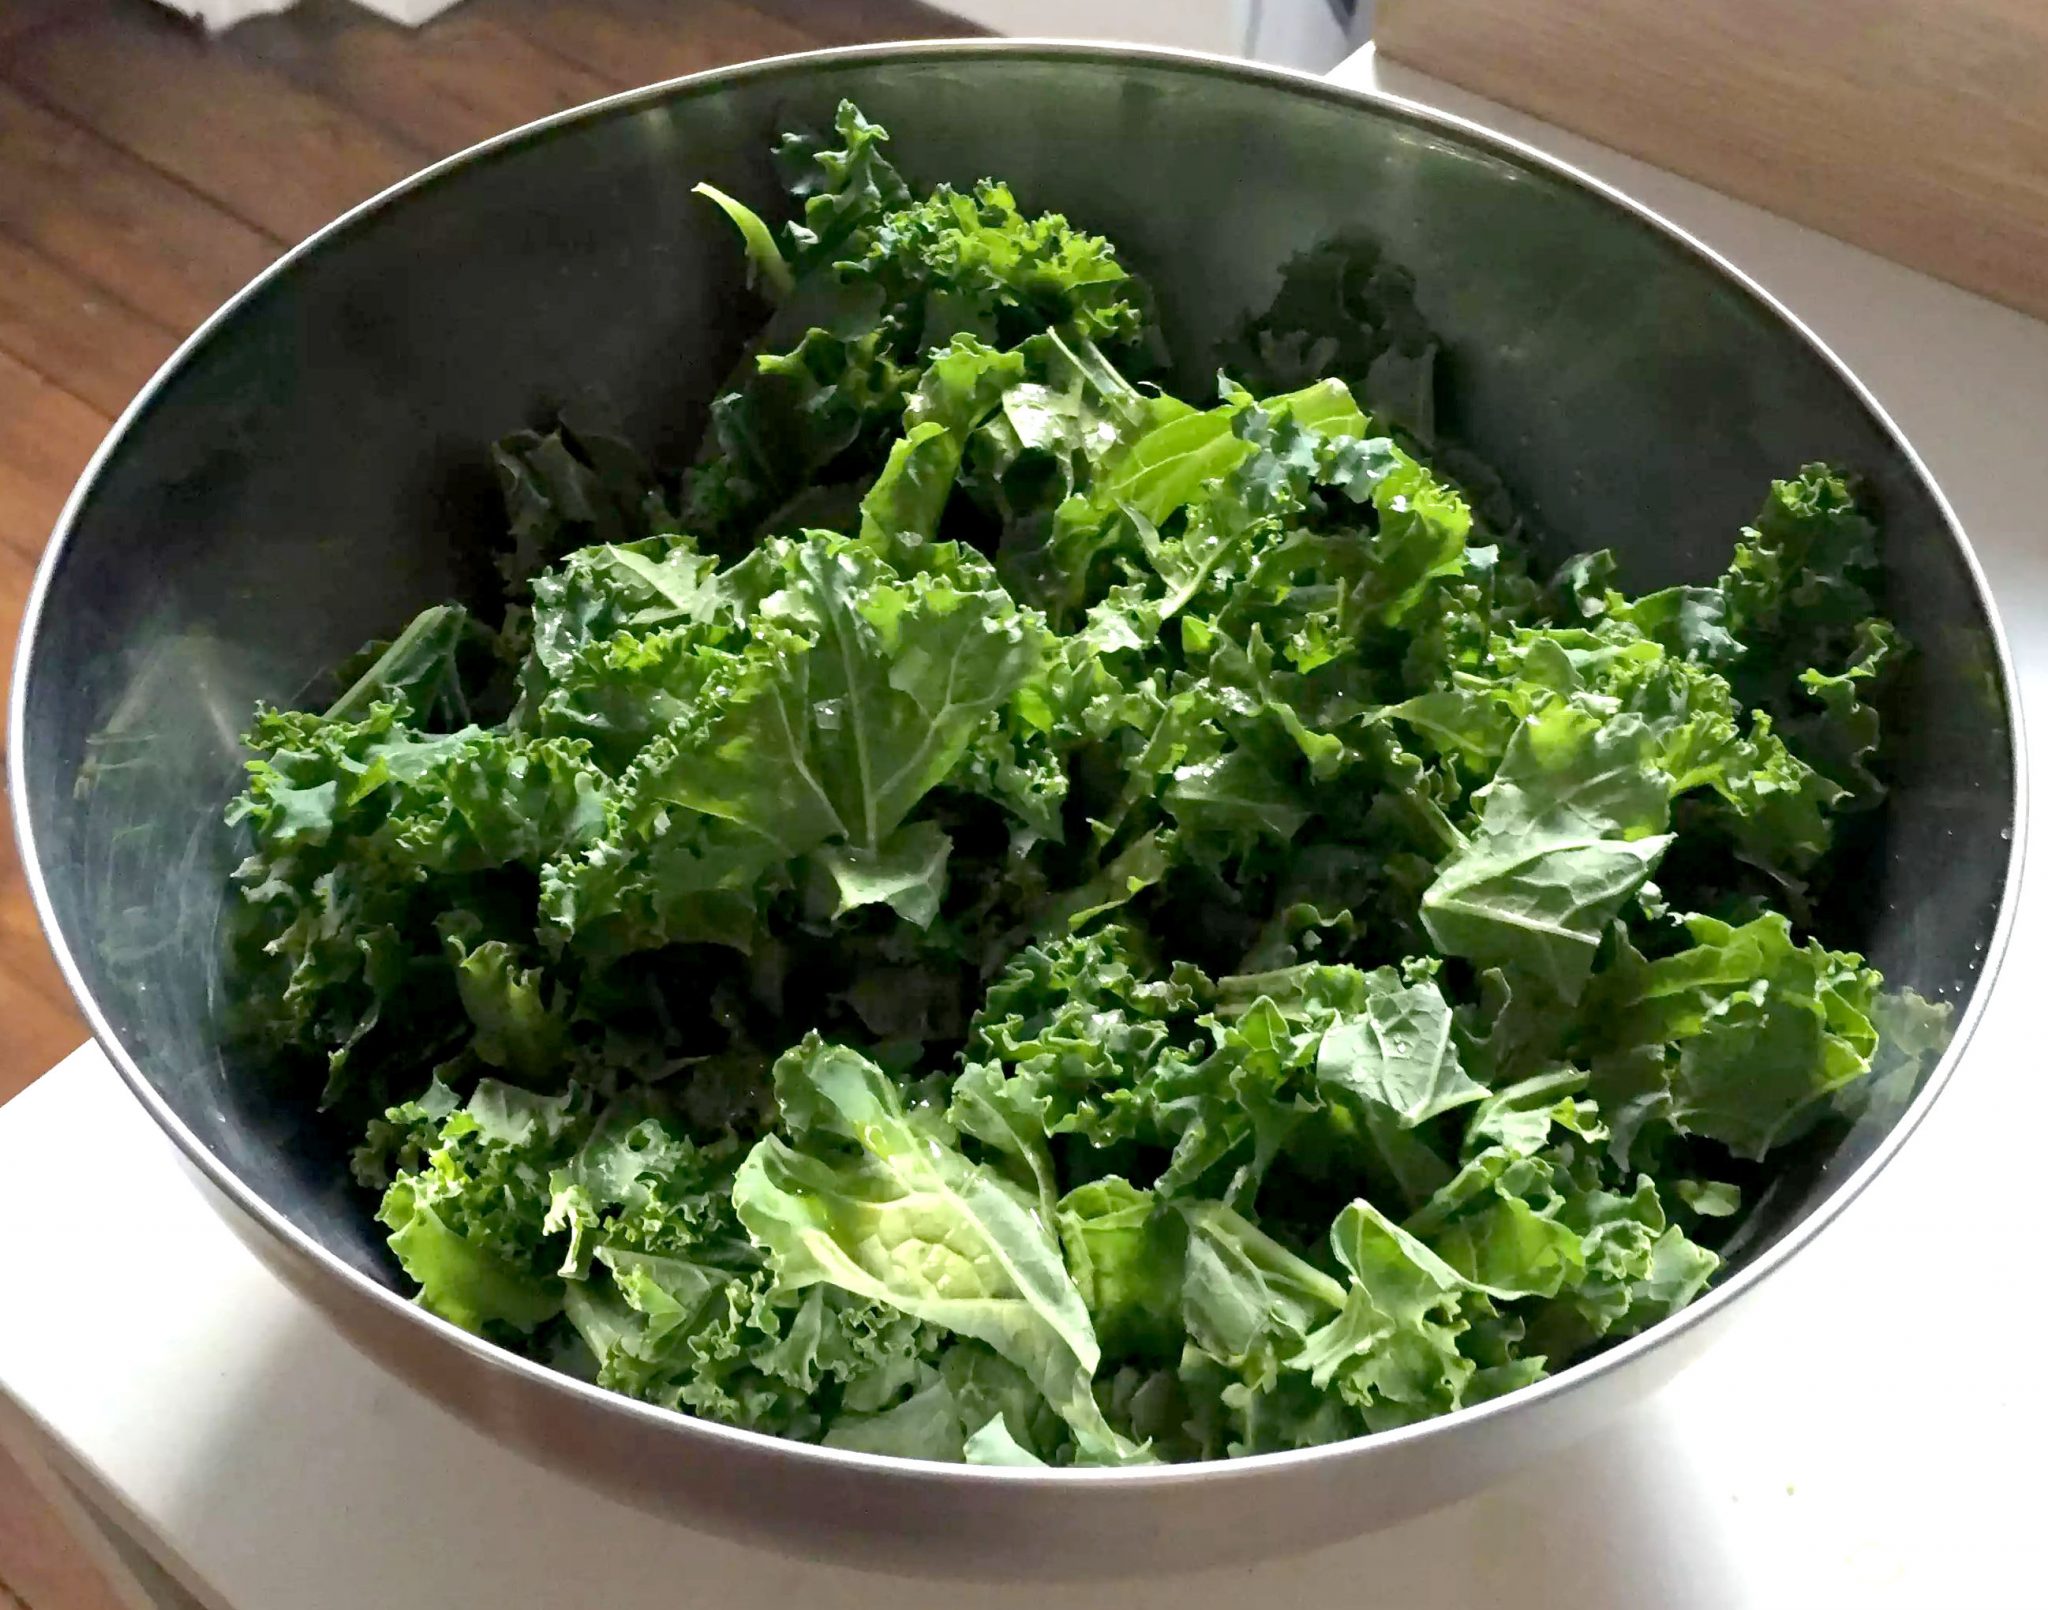 Kale, Roasted Broccoli & Almond Salad with Lemon Dressing by Emma Eats & Explores - Gluten-Free, Grain-Free, Dairy-Free, Sugar-Free, SCD, Paleo, Vegetarian, Vegan, Whole30